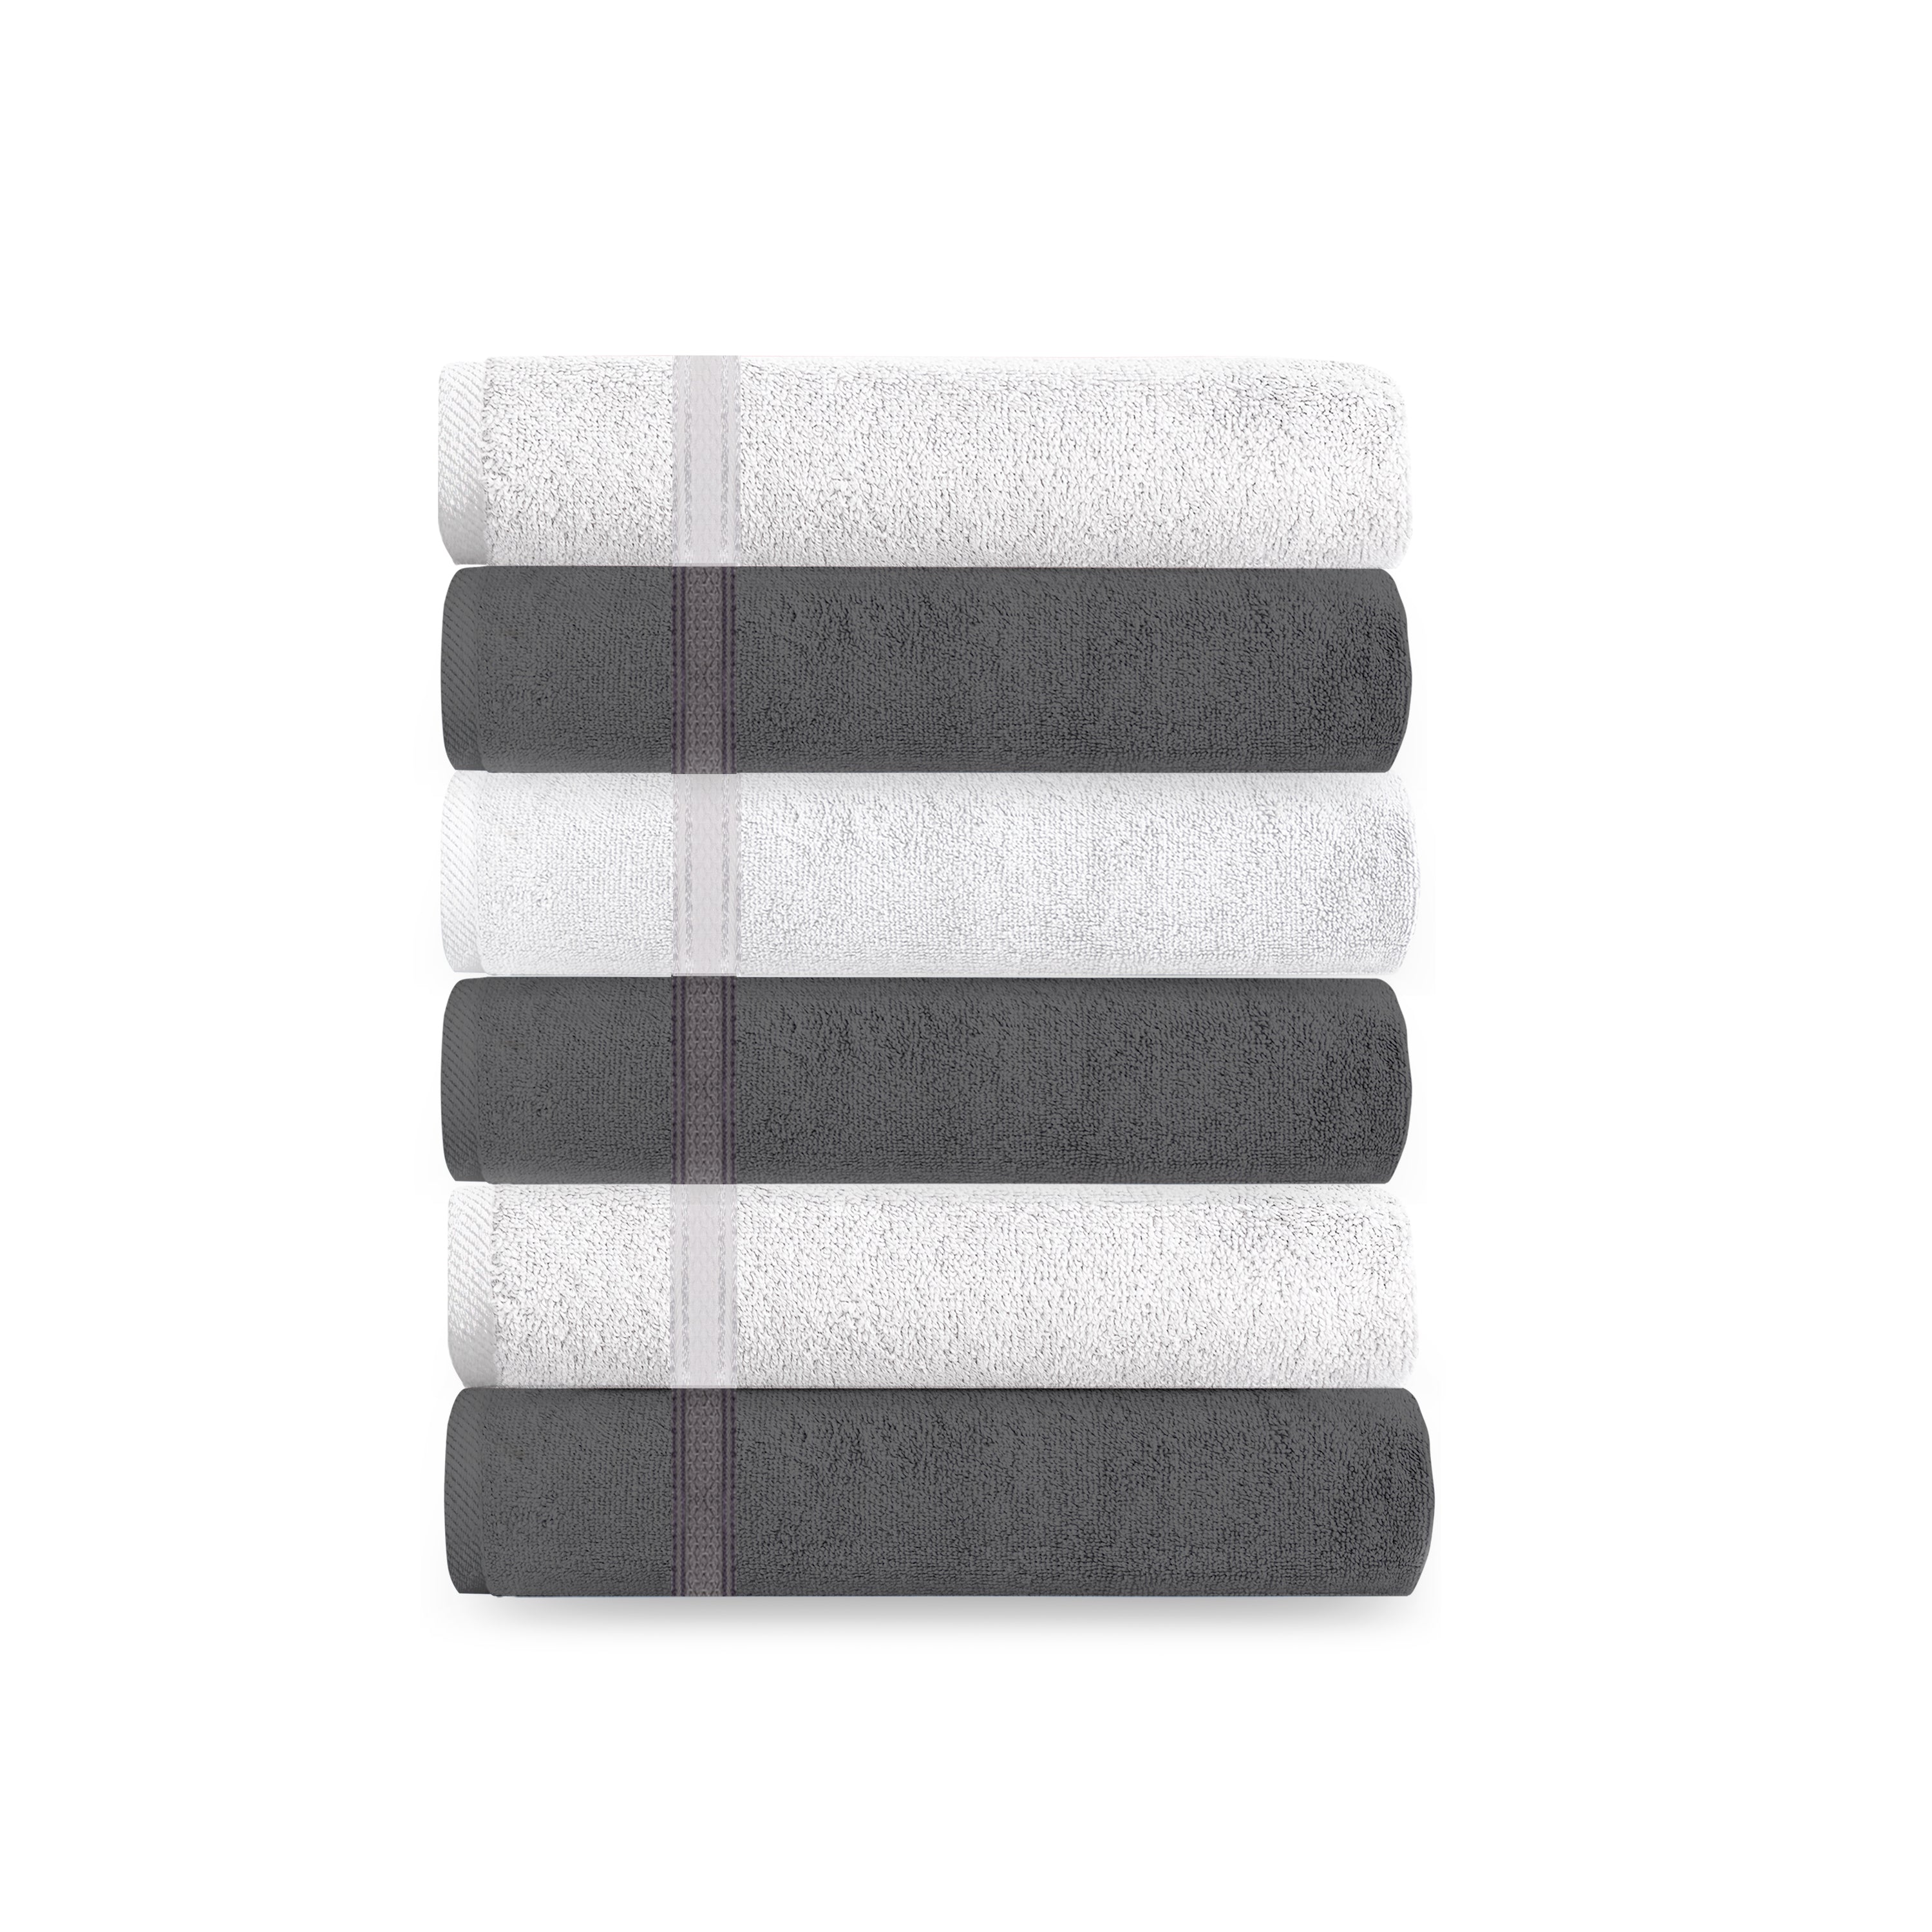 Aquacado 26 x 26 cm Face Towel Set Of 6 White & Charcoal Grey